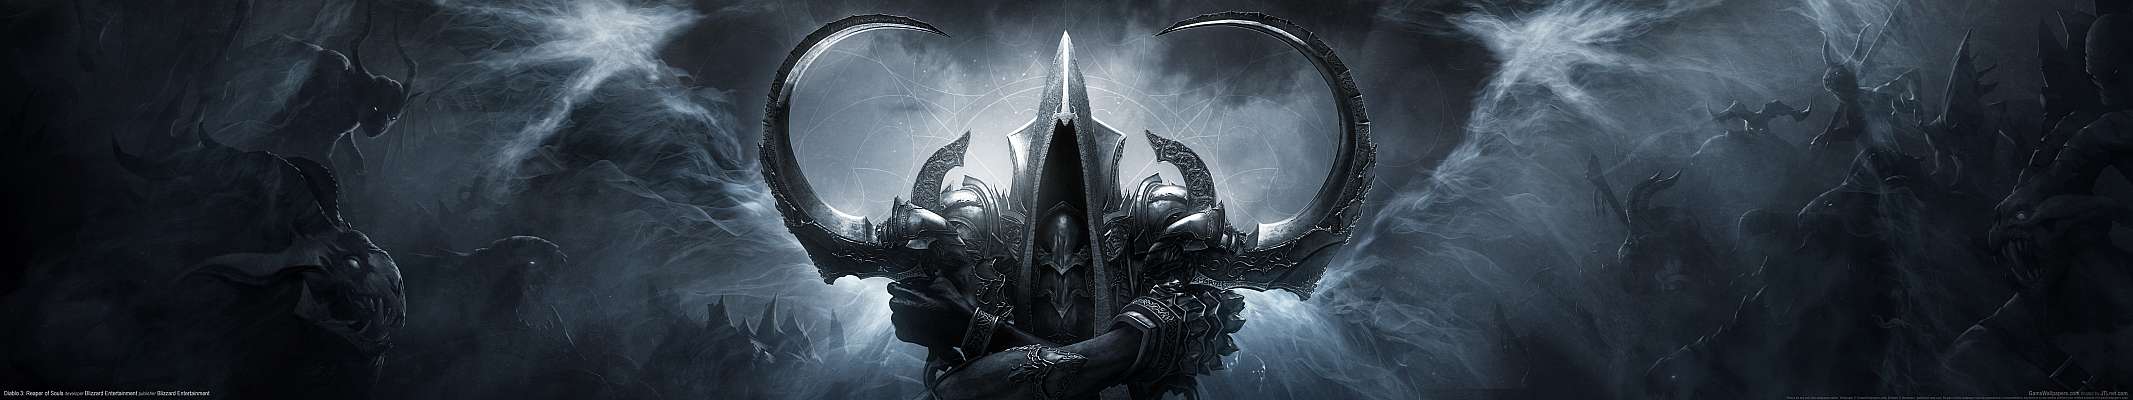 Diablo 3: Reaper of Souls triple screen fondo de escritorio